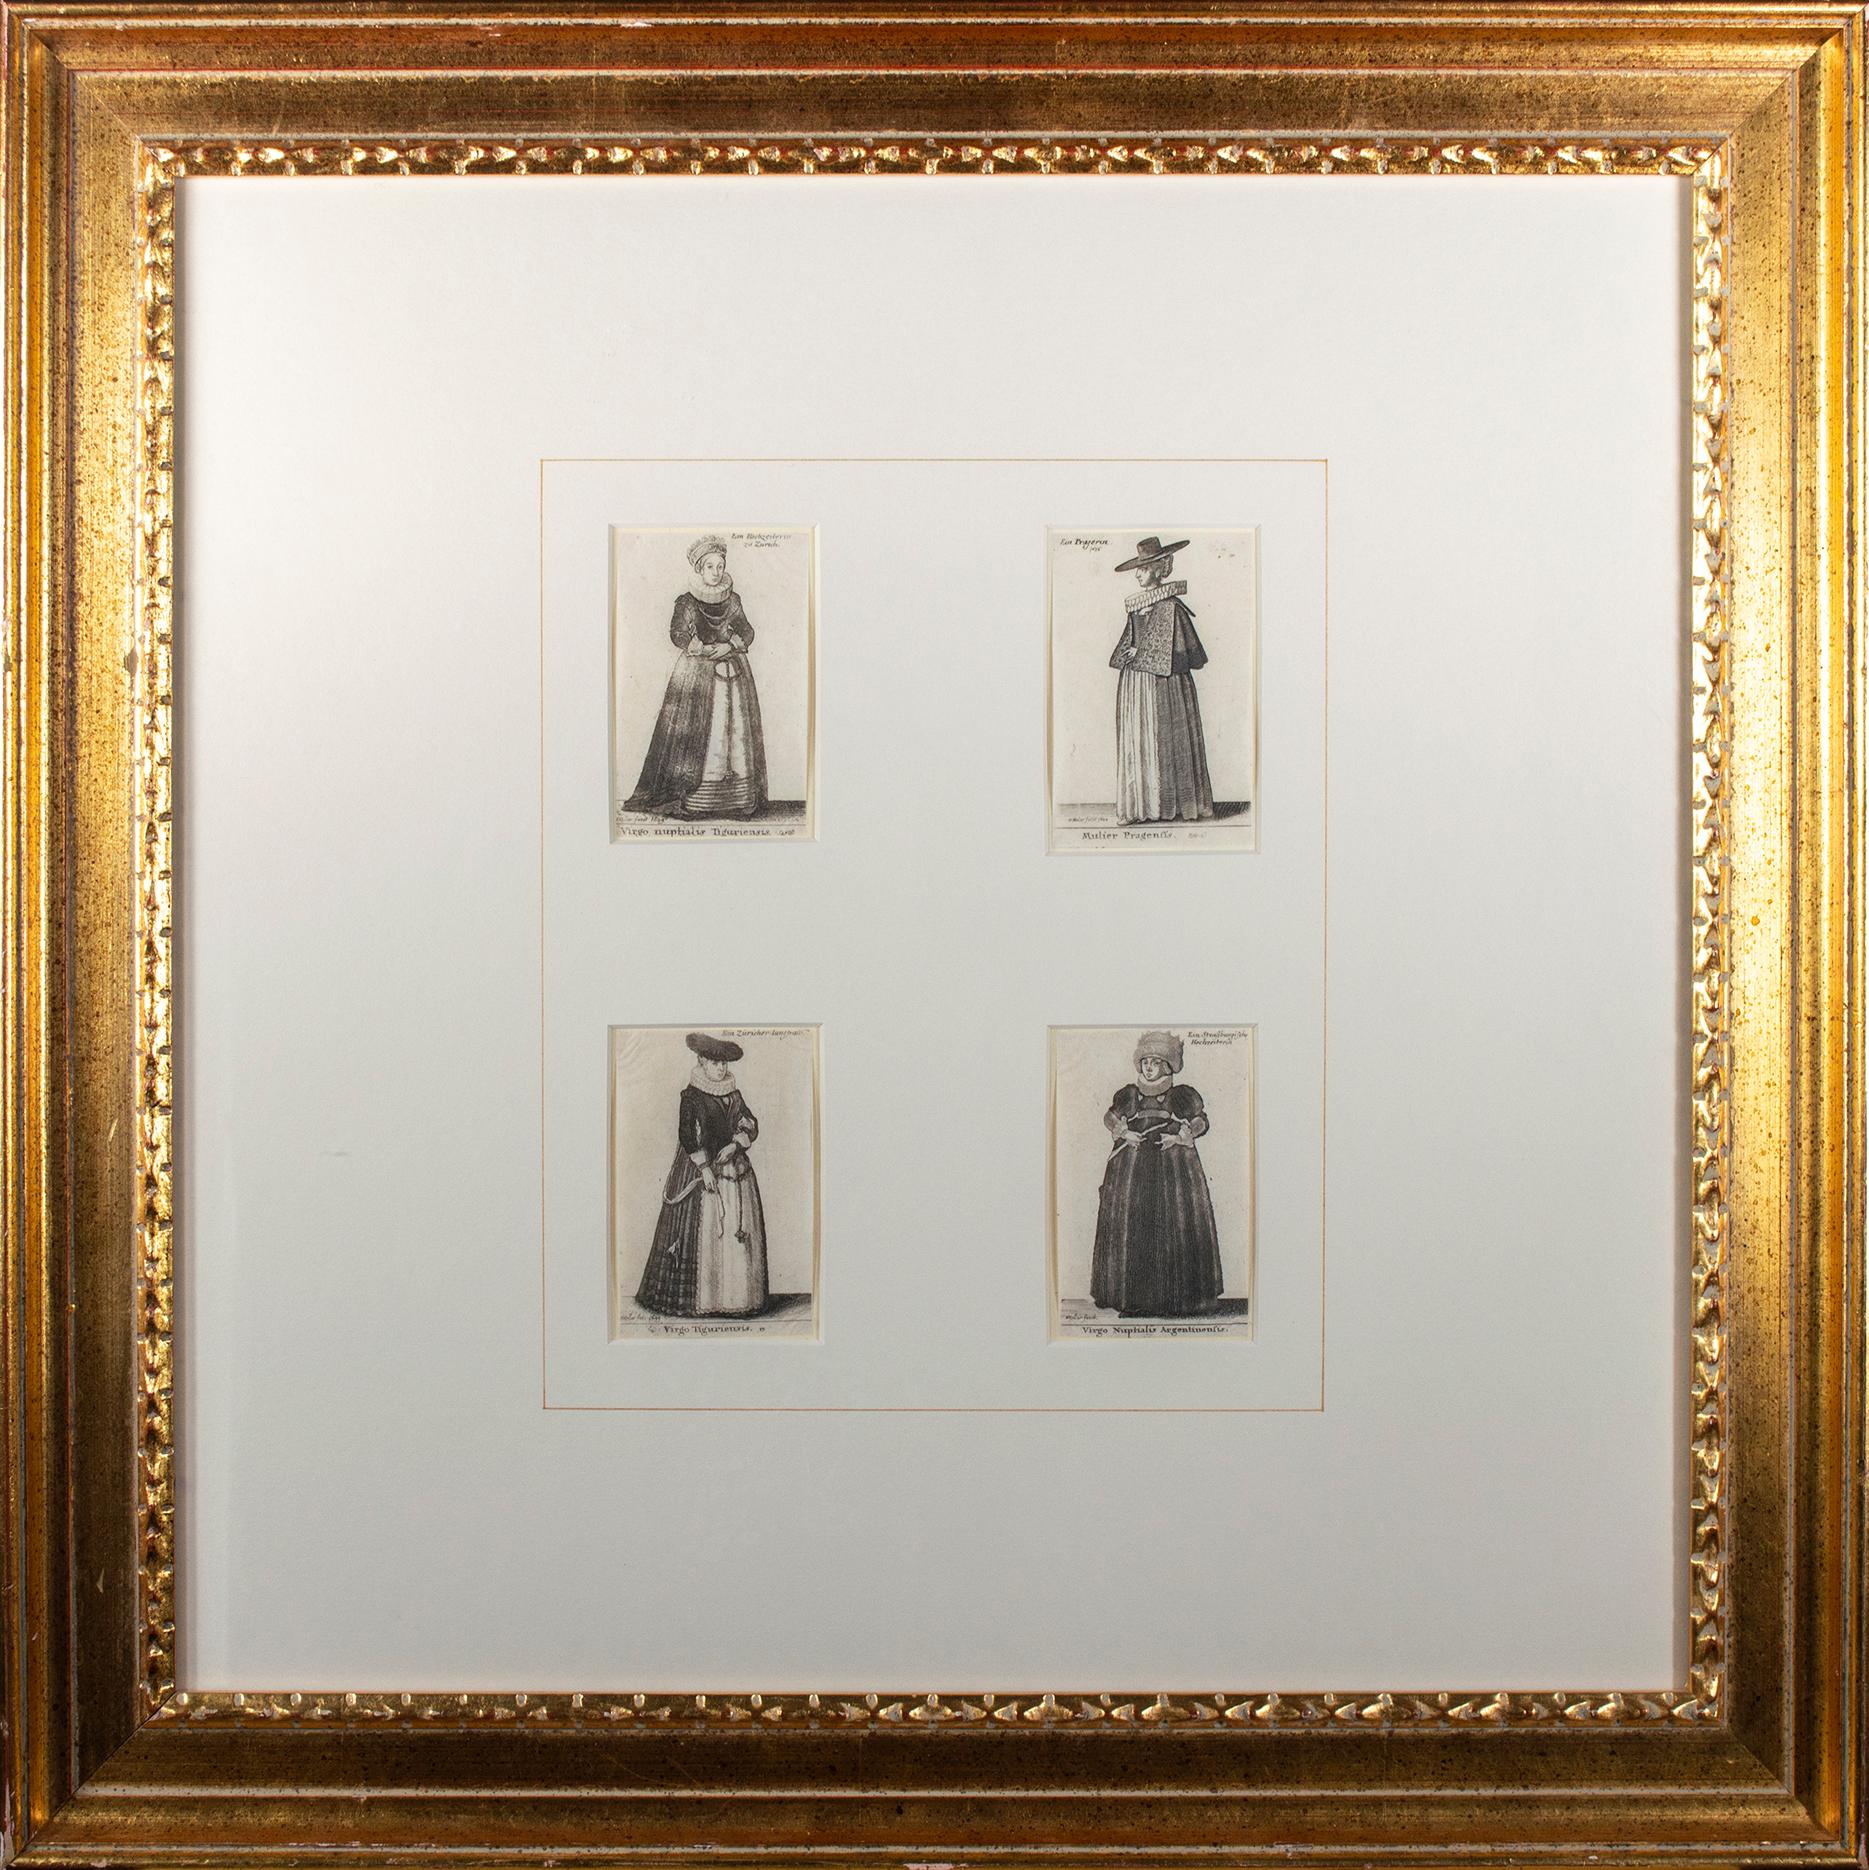 Four original etchings of women from 'Aula Veneris' series by Wenceslaus Hollar